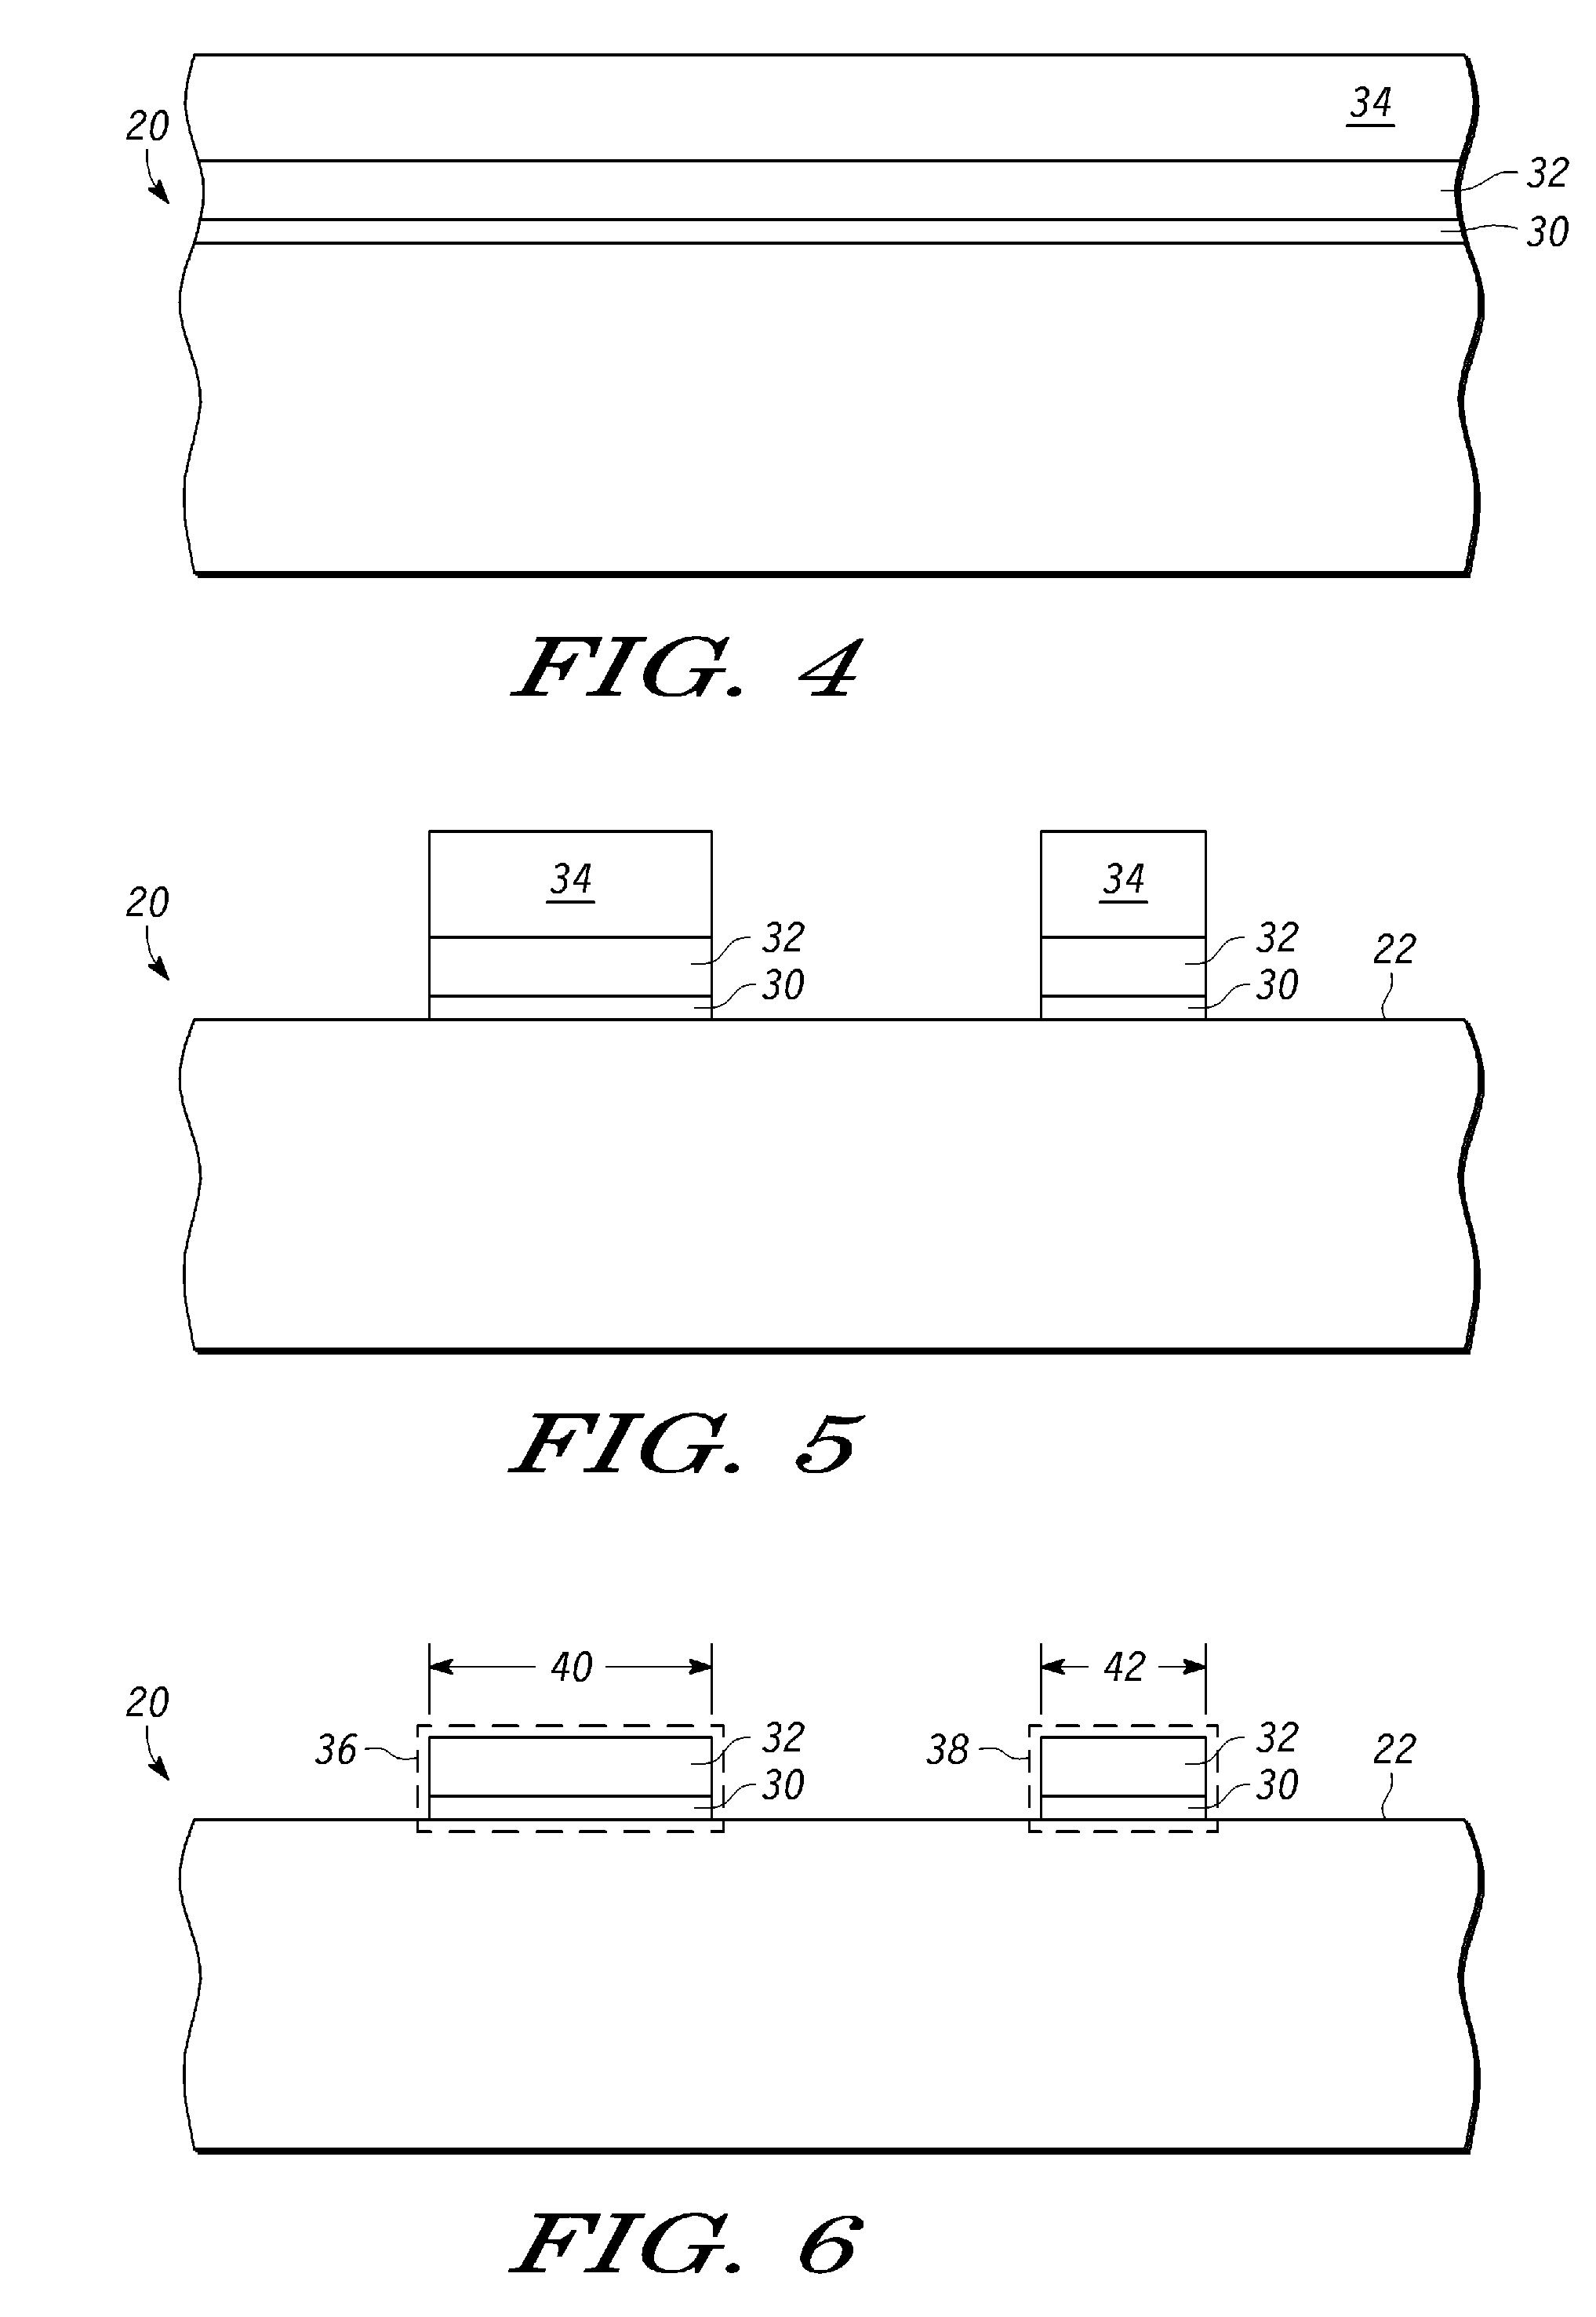 Multi-gate semiconductor devices